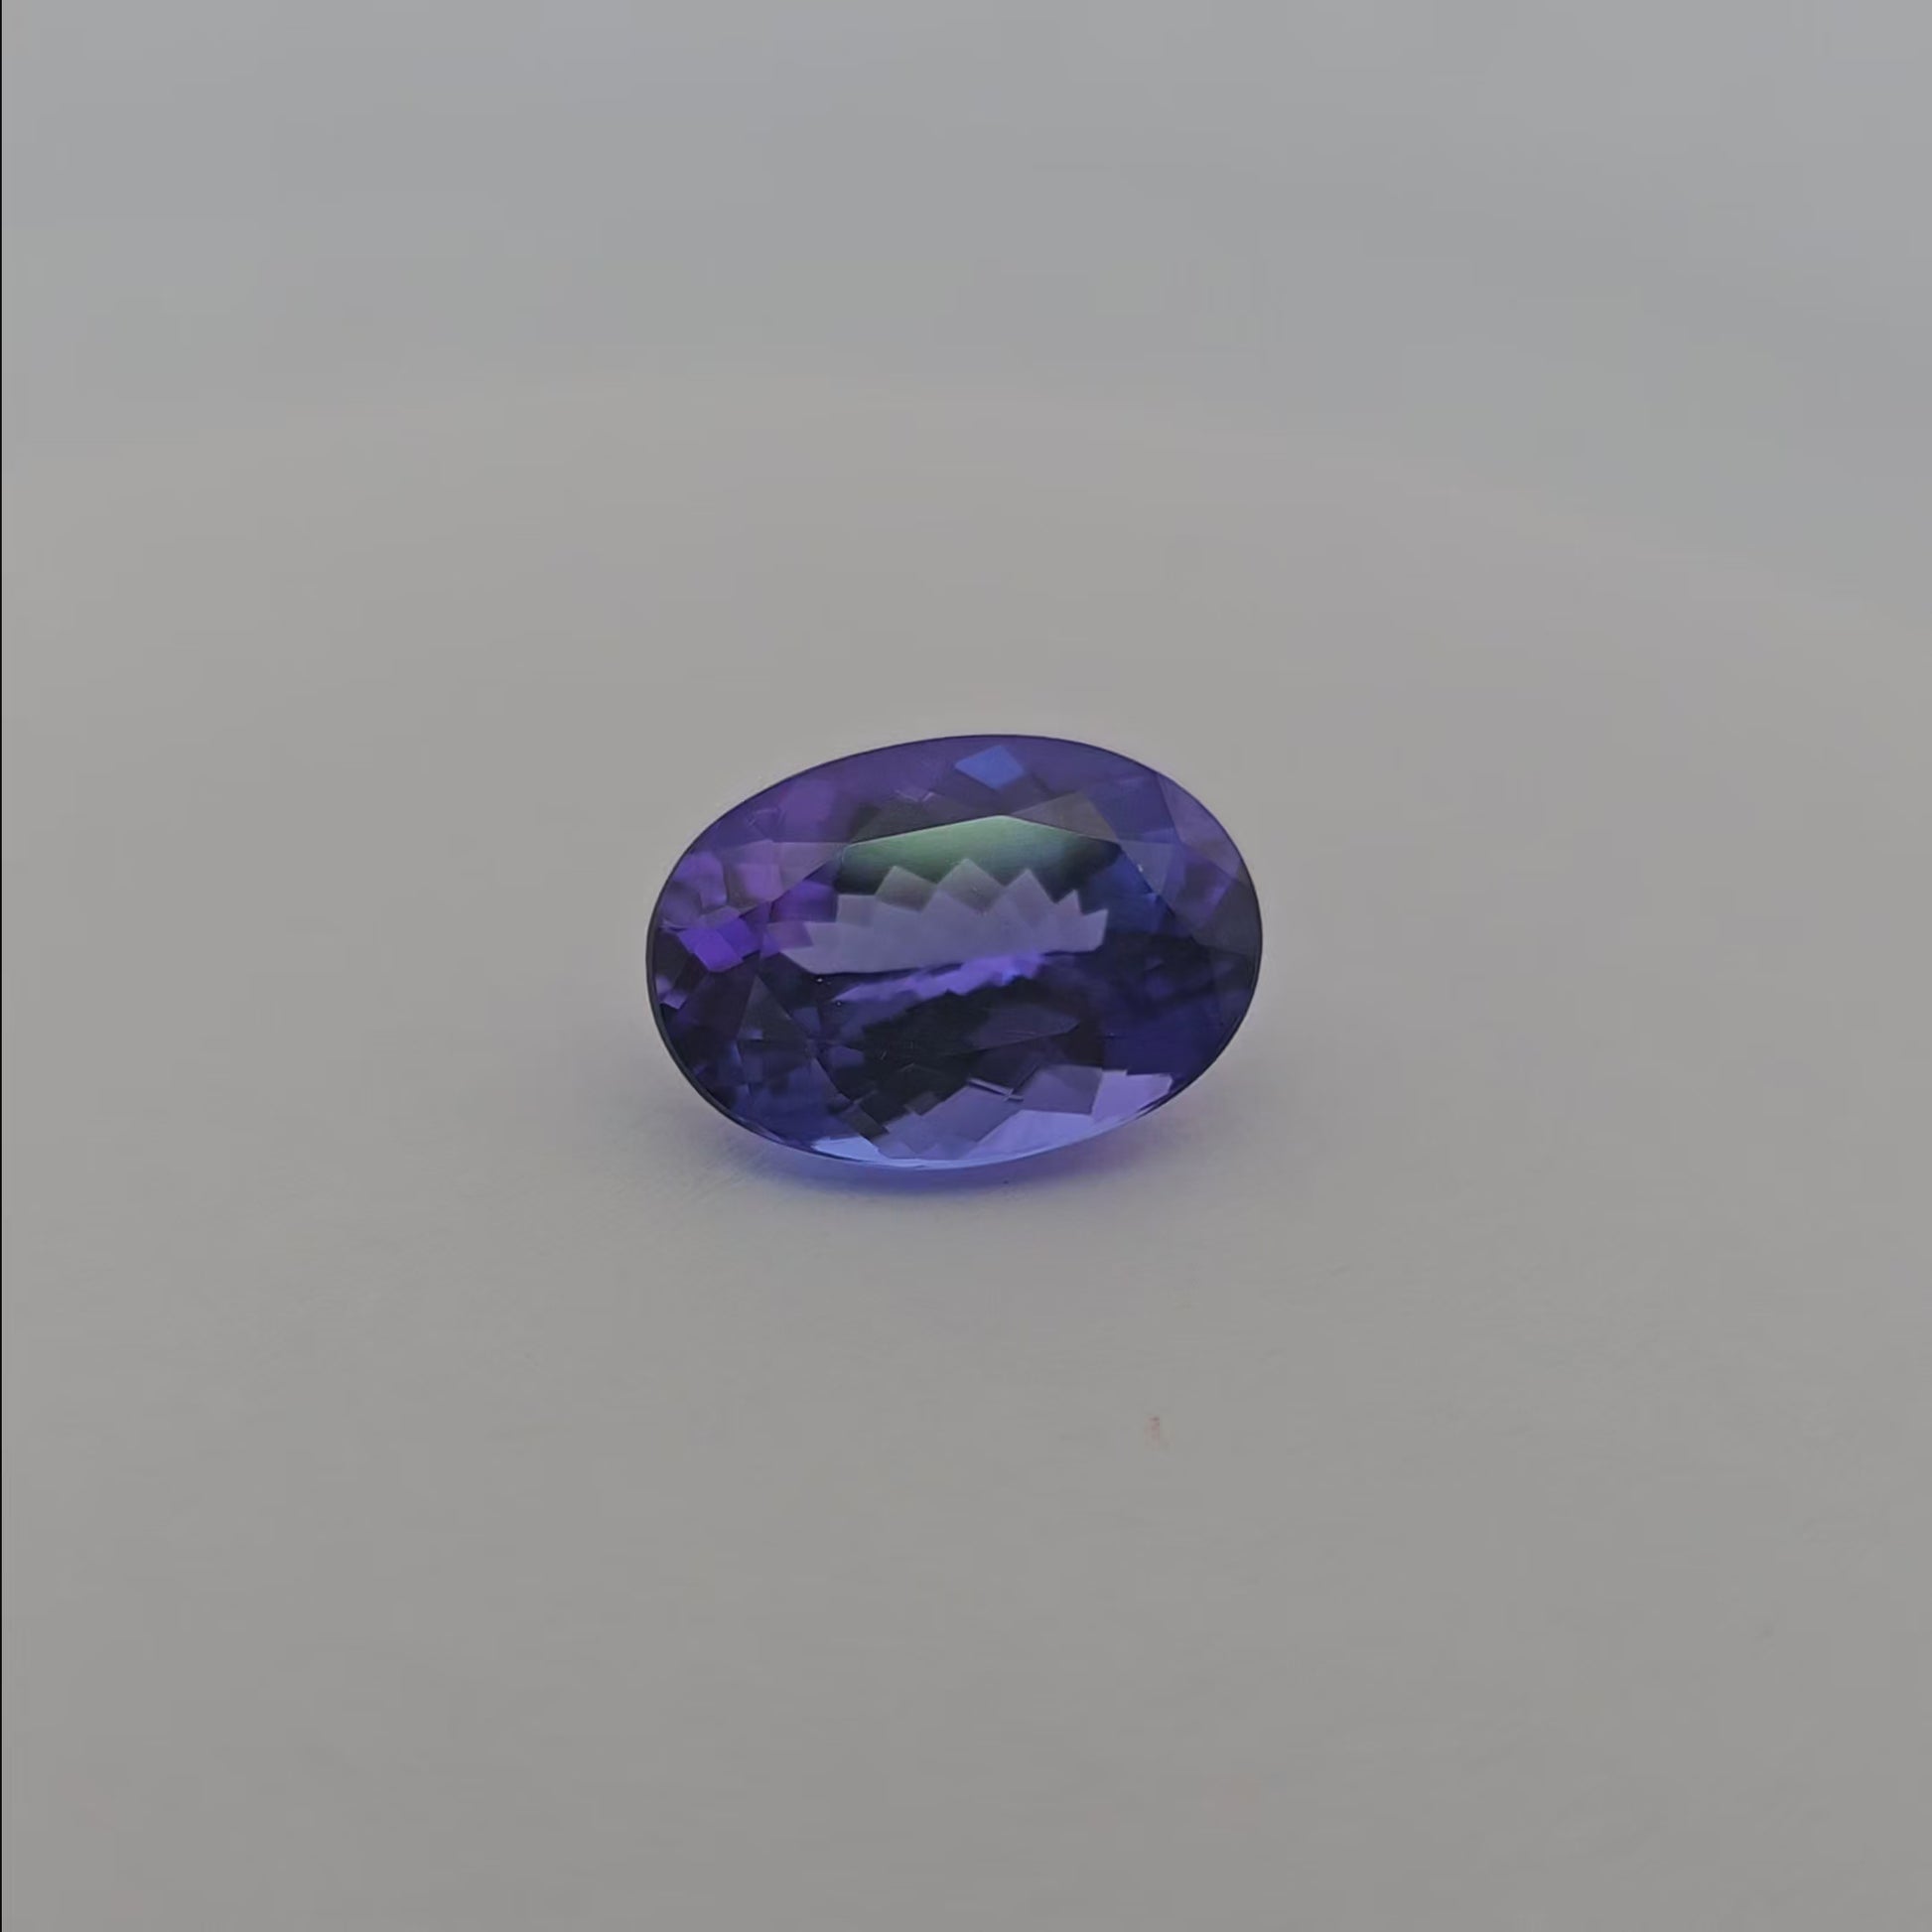 loose Natural Blue Tanzanite Stone 8.37 Carats Oval Cut (15.18 x 10.73 x 7.18 mm) 